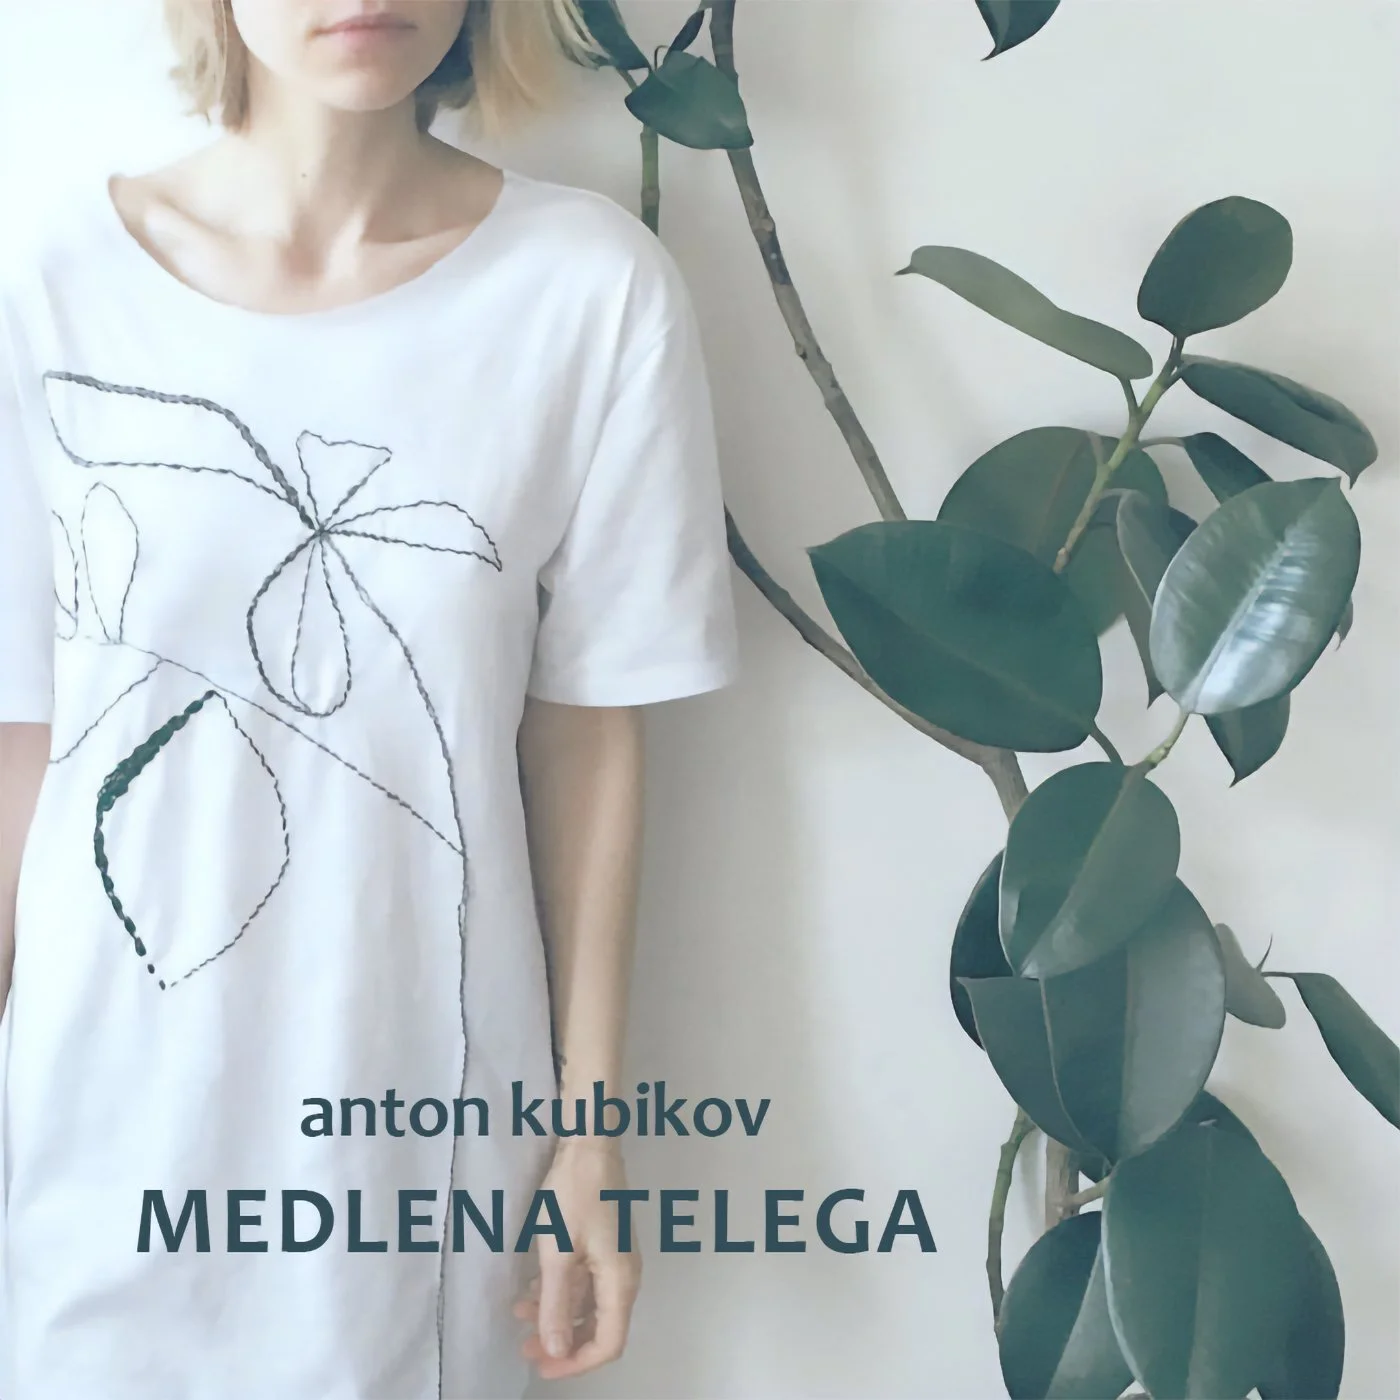 Anton Kubikov - Reverslove (Original Mix)